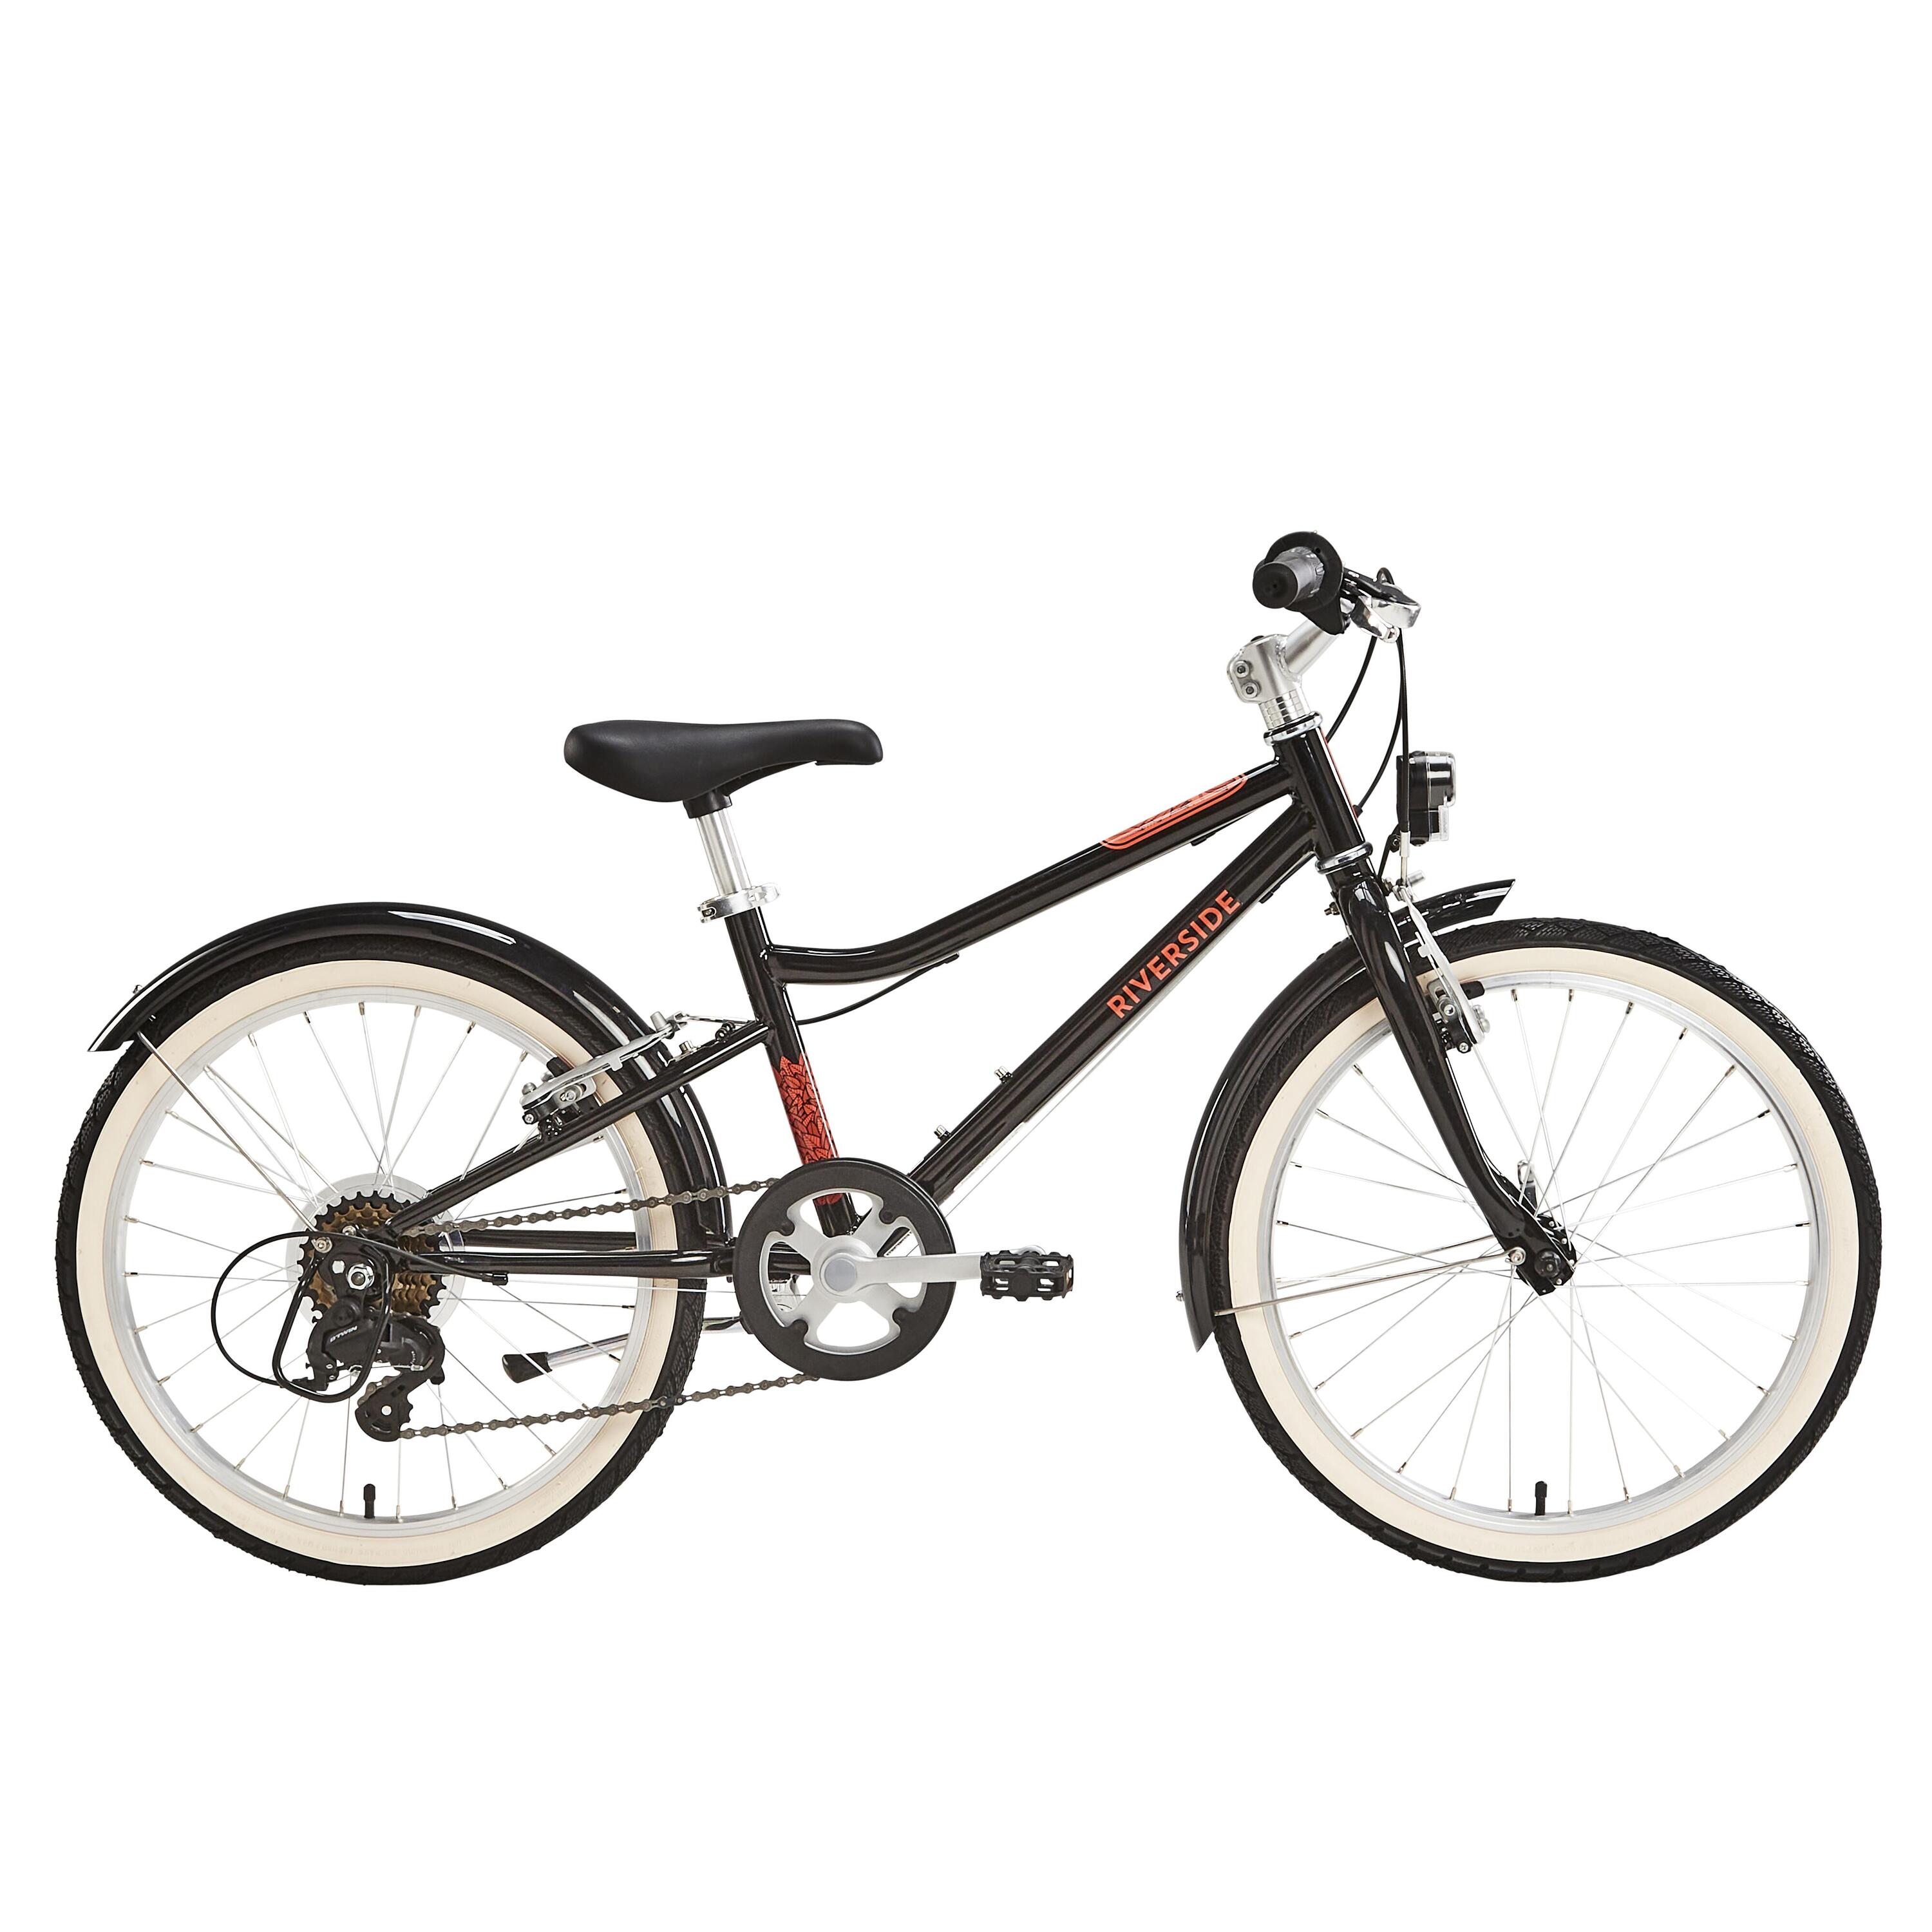 20 inch kids hybrid bike riverside 500 6-9 years - Black/peach 1/15